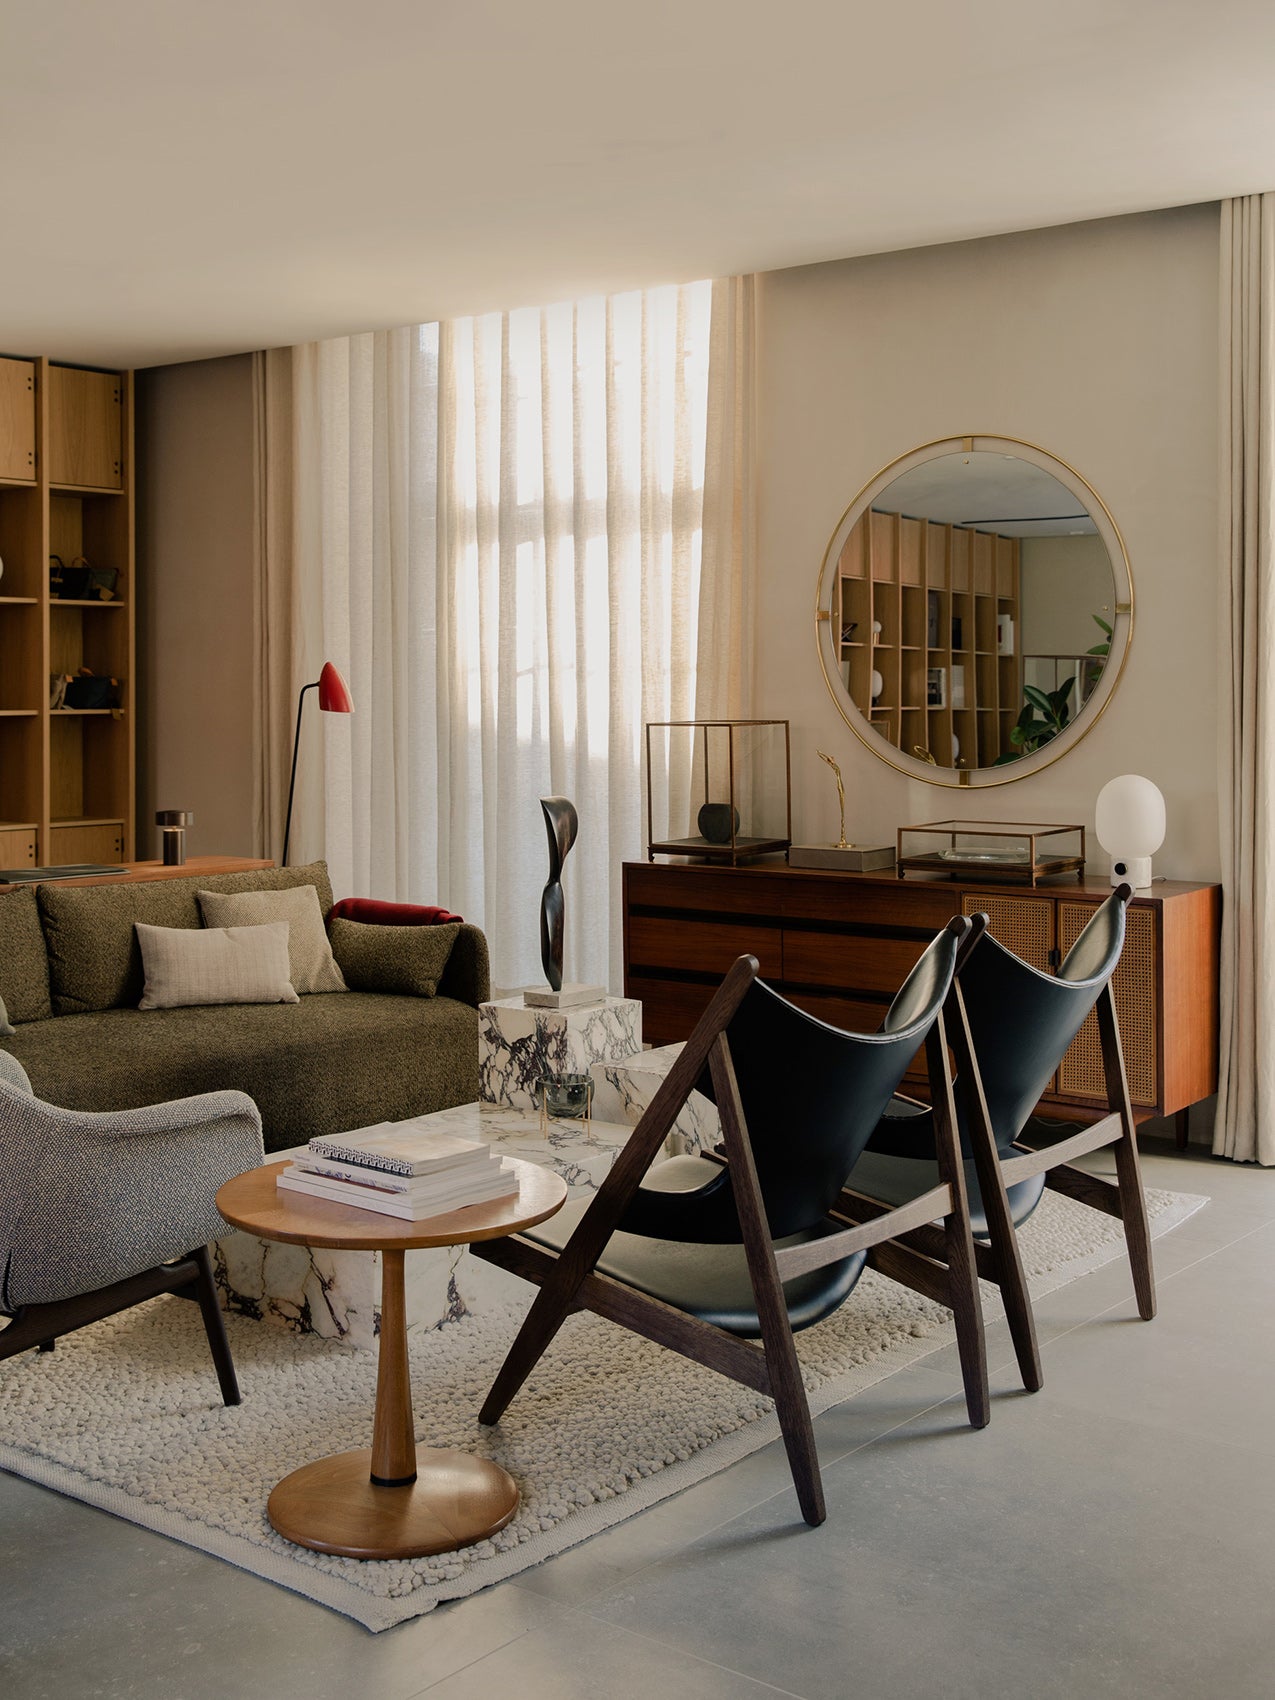 Knitting Chair-Lounge Chair-Ib Kofod-Larsen-menu-minimalist-modern-danish-design-home-decor